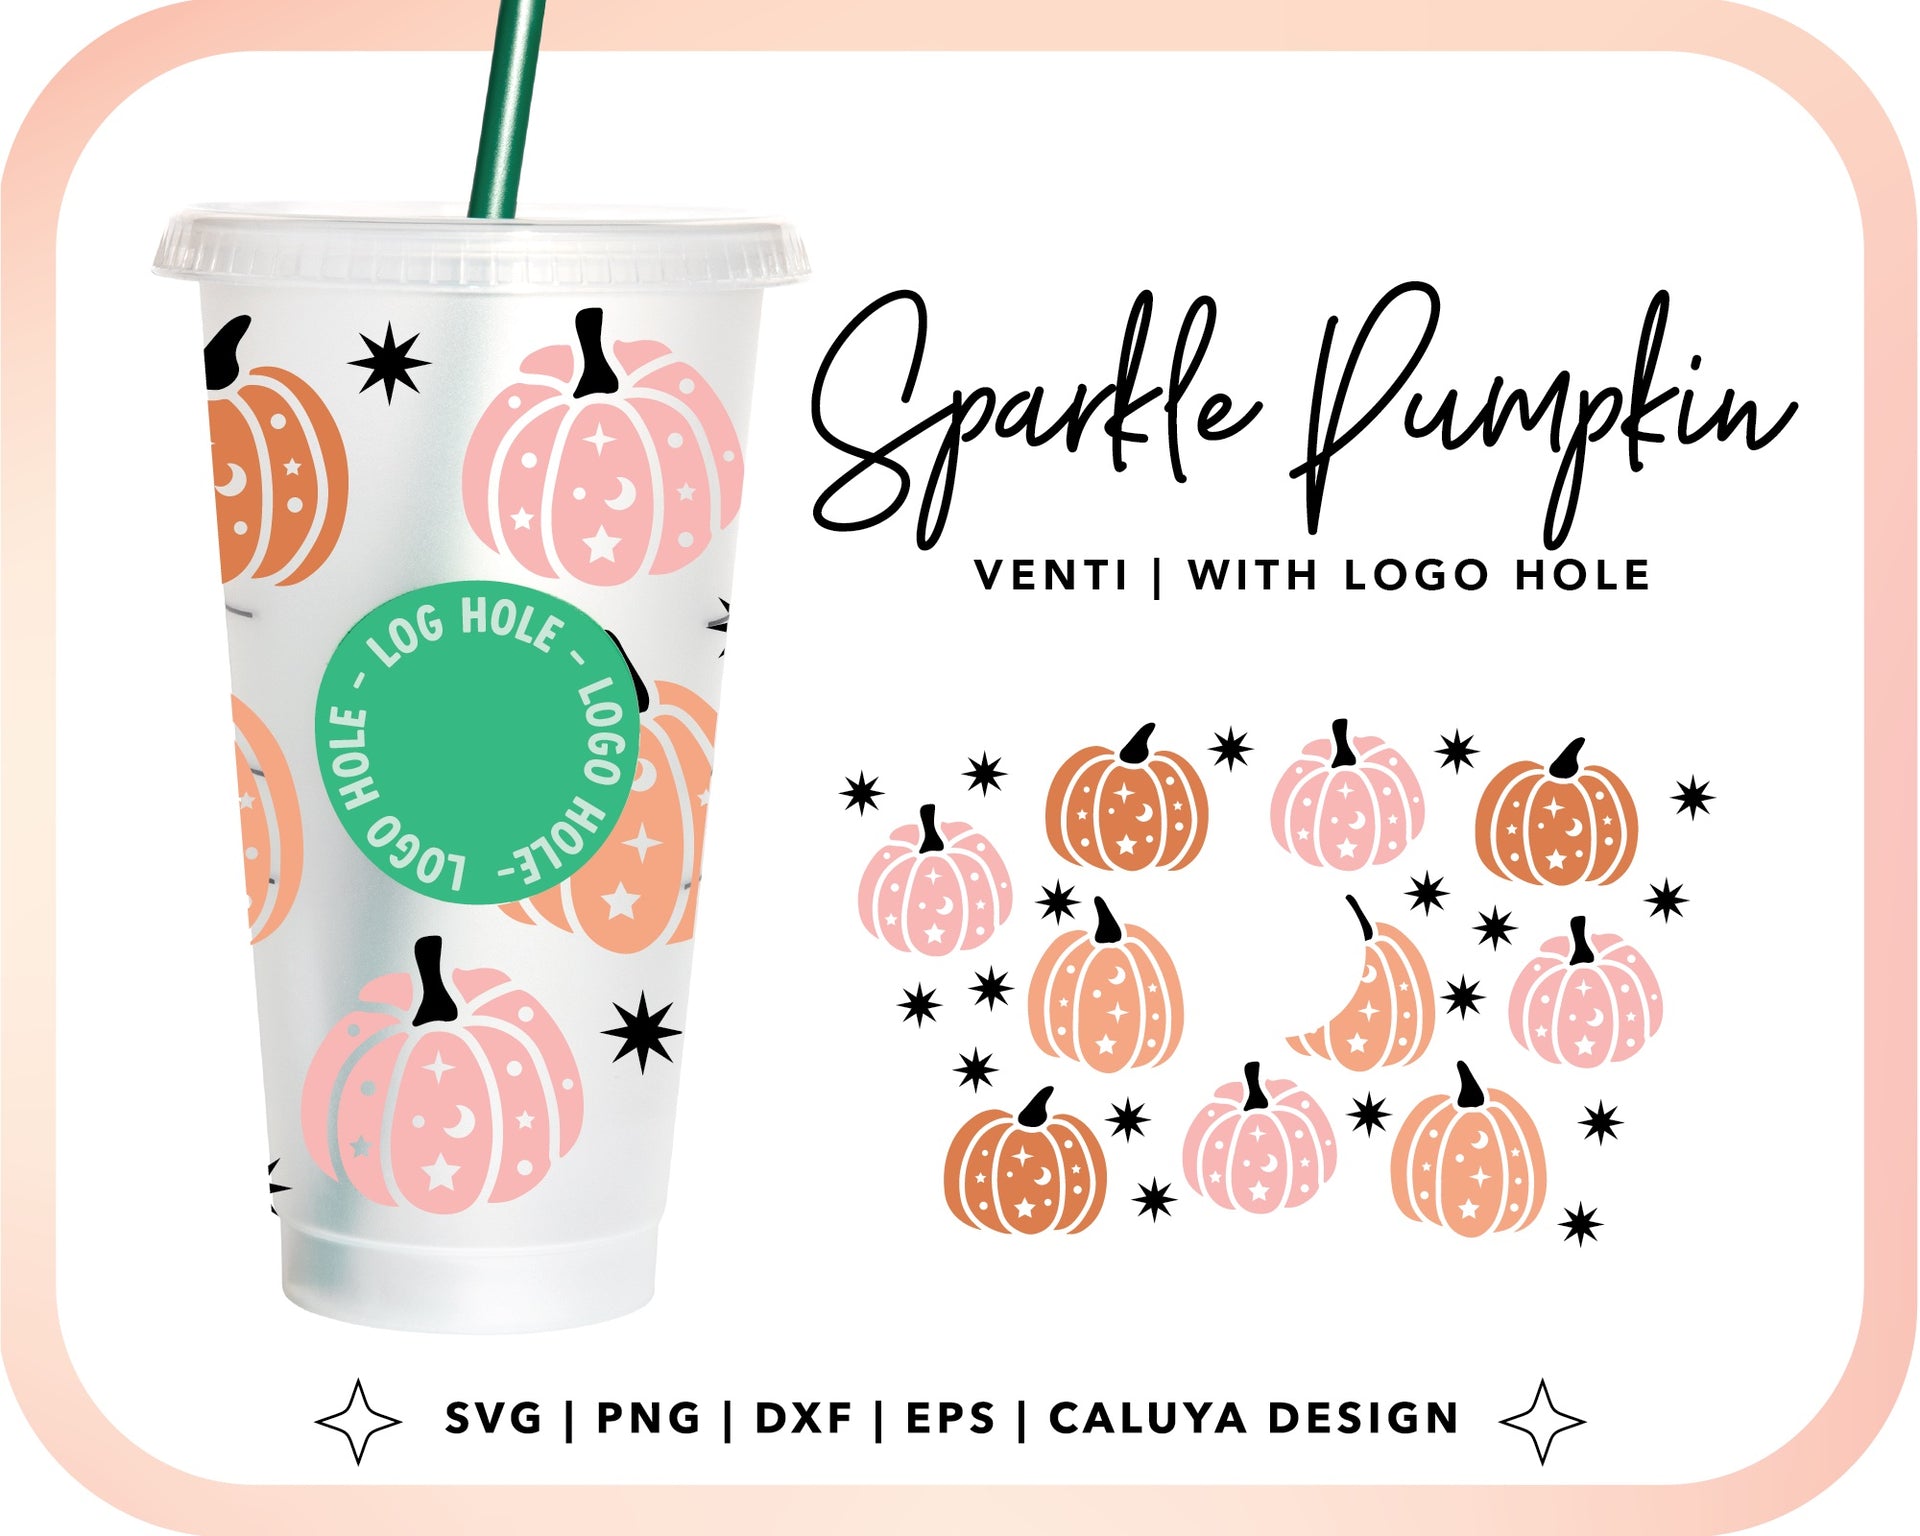 Starbucks Logo (Classic) PNG Transparent & SVG Vector - Freebie Supply